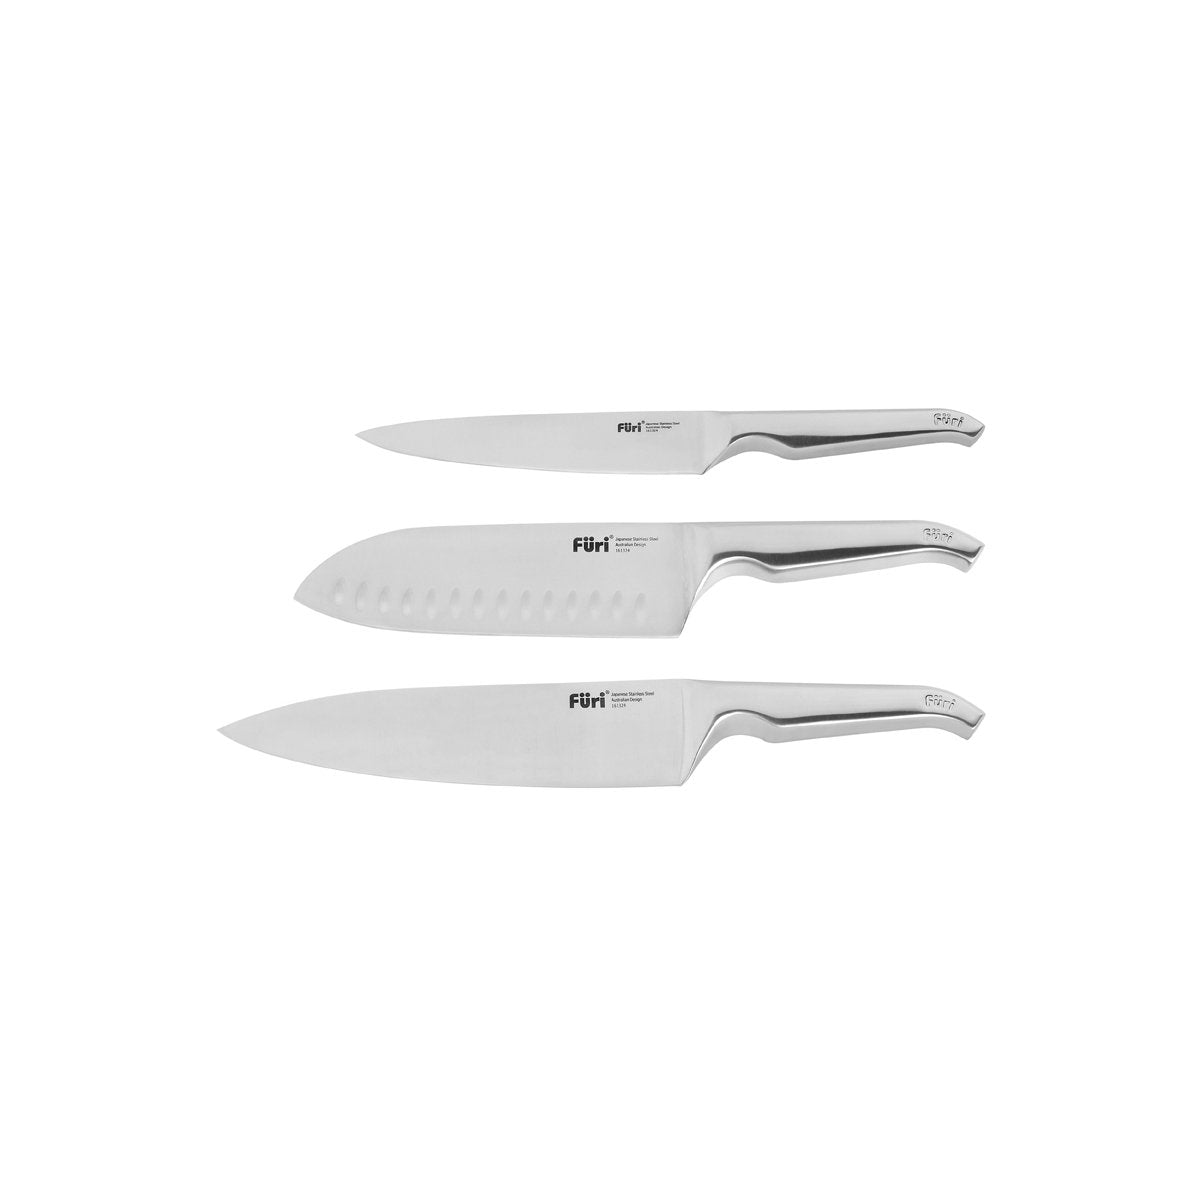 27166 Furi Pro Acacia East West Knife Set 3pc Tomkin Australia Hospitality Supplies